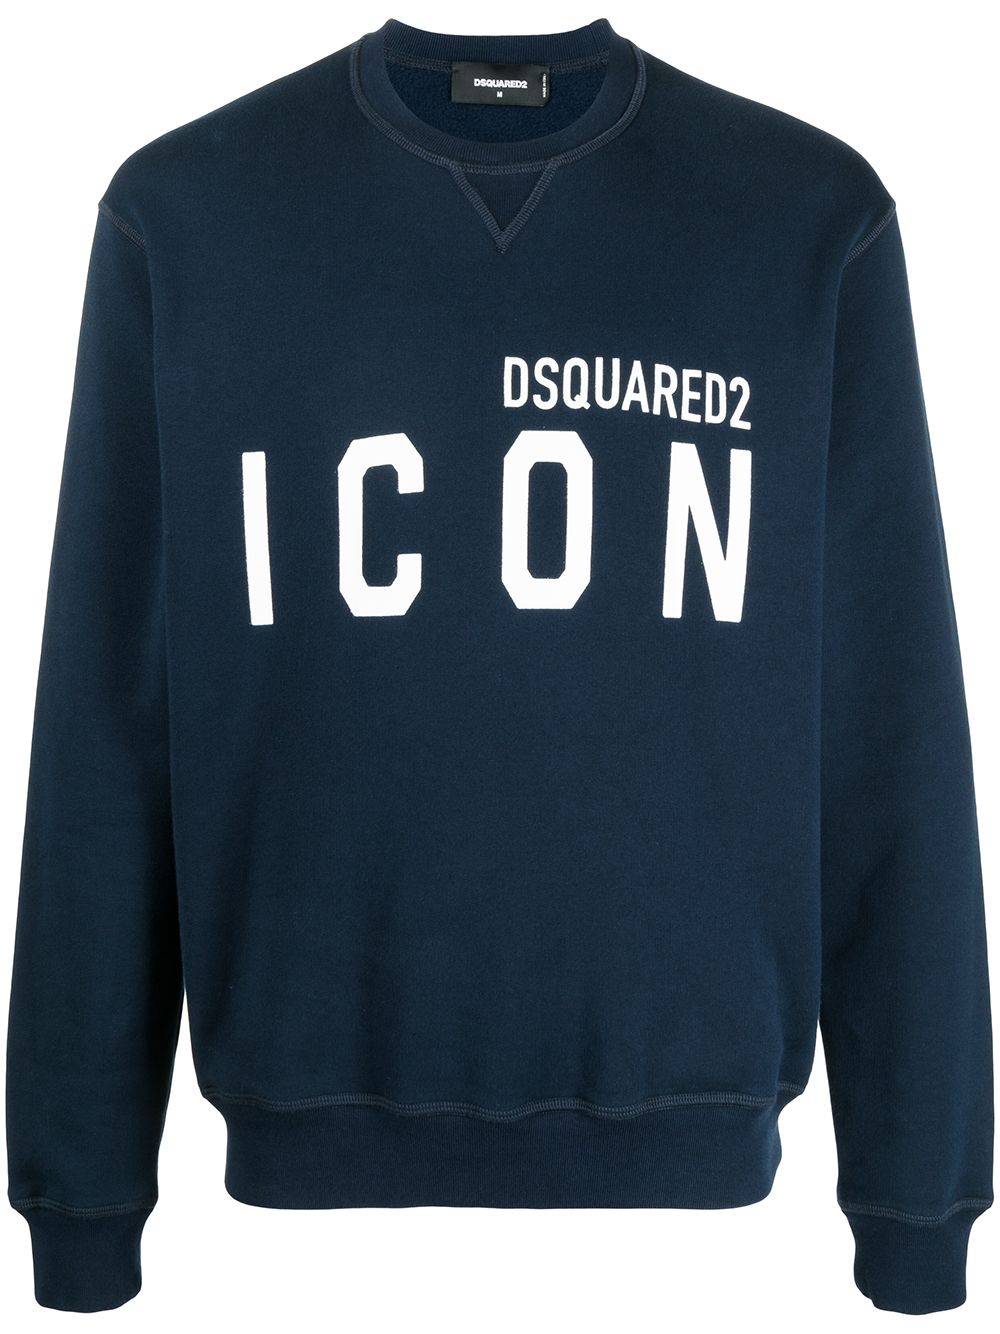 Dsquared2 ICON Logo Sweatshirt - 972 Navy - Escape Menswear